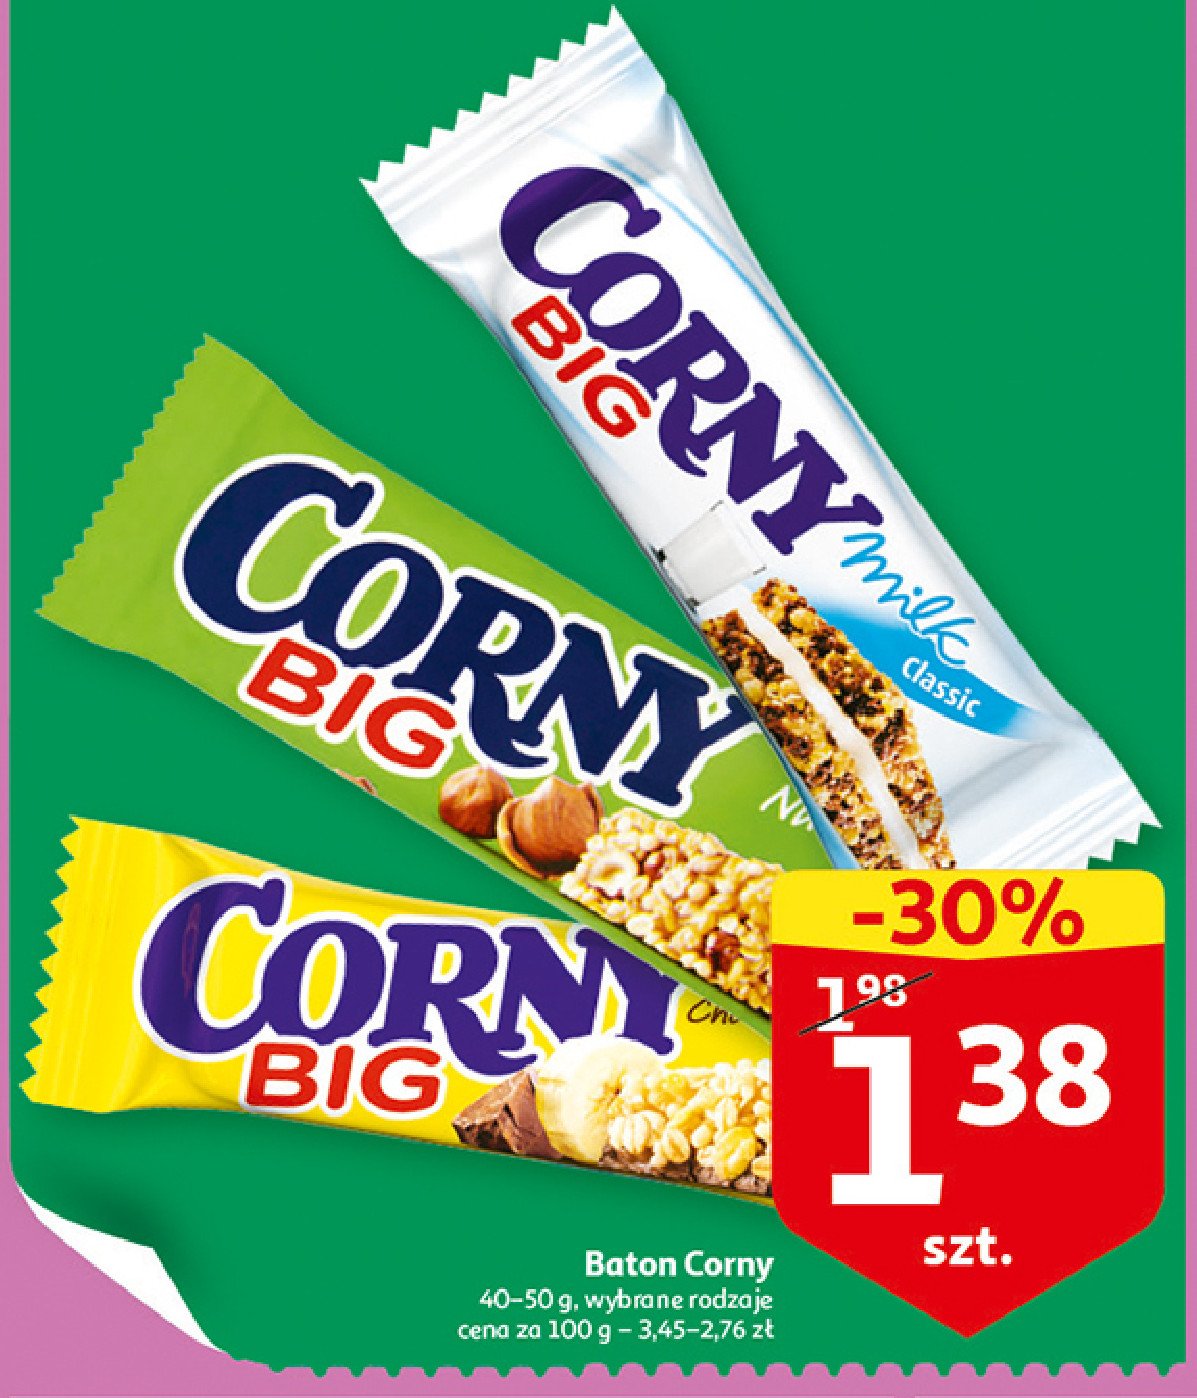 Baton classic Corny milk big promocja